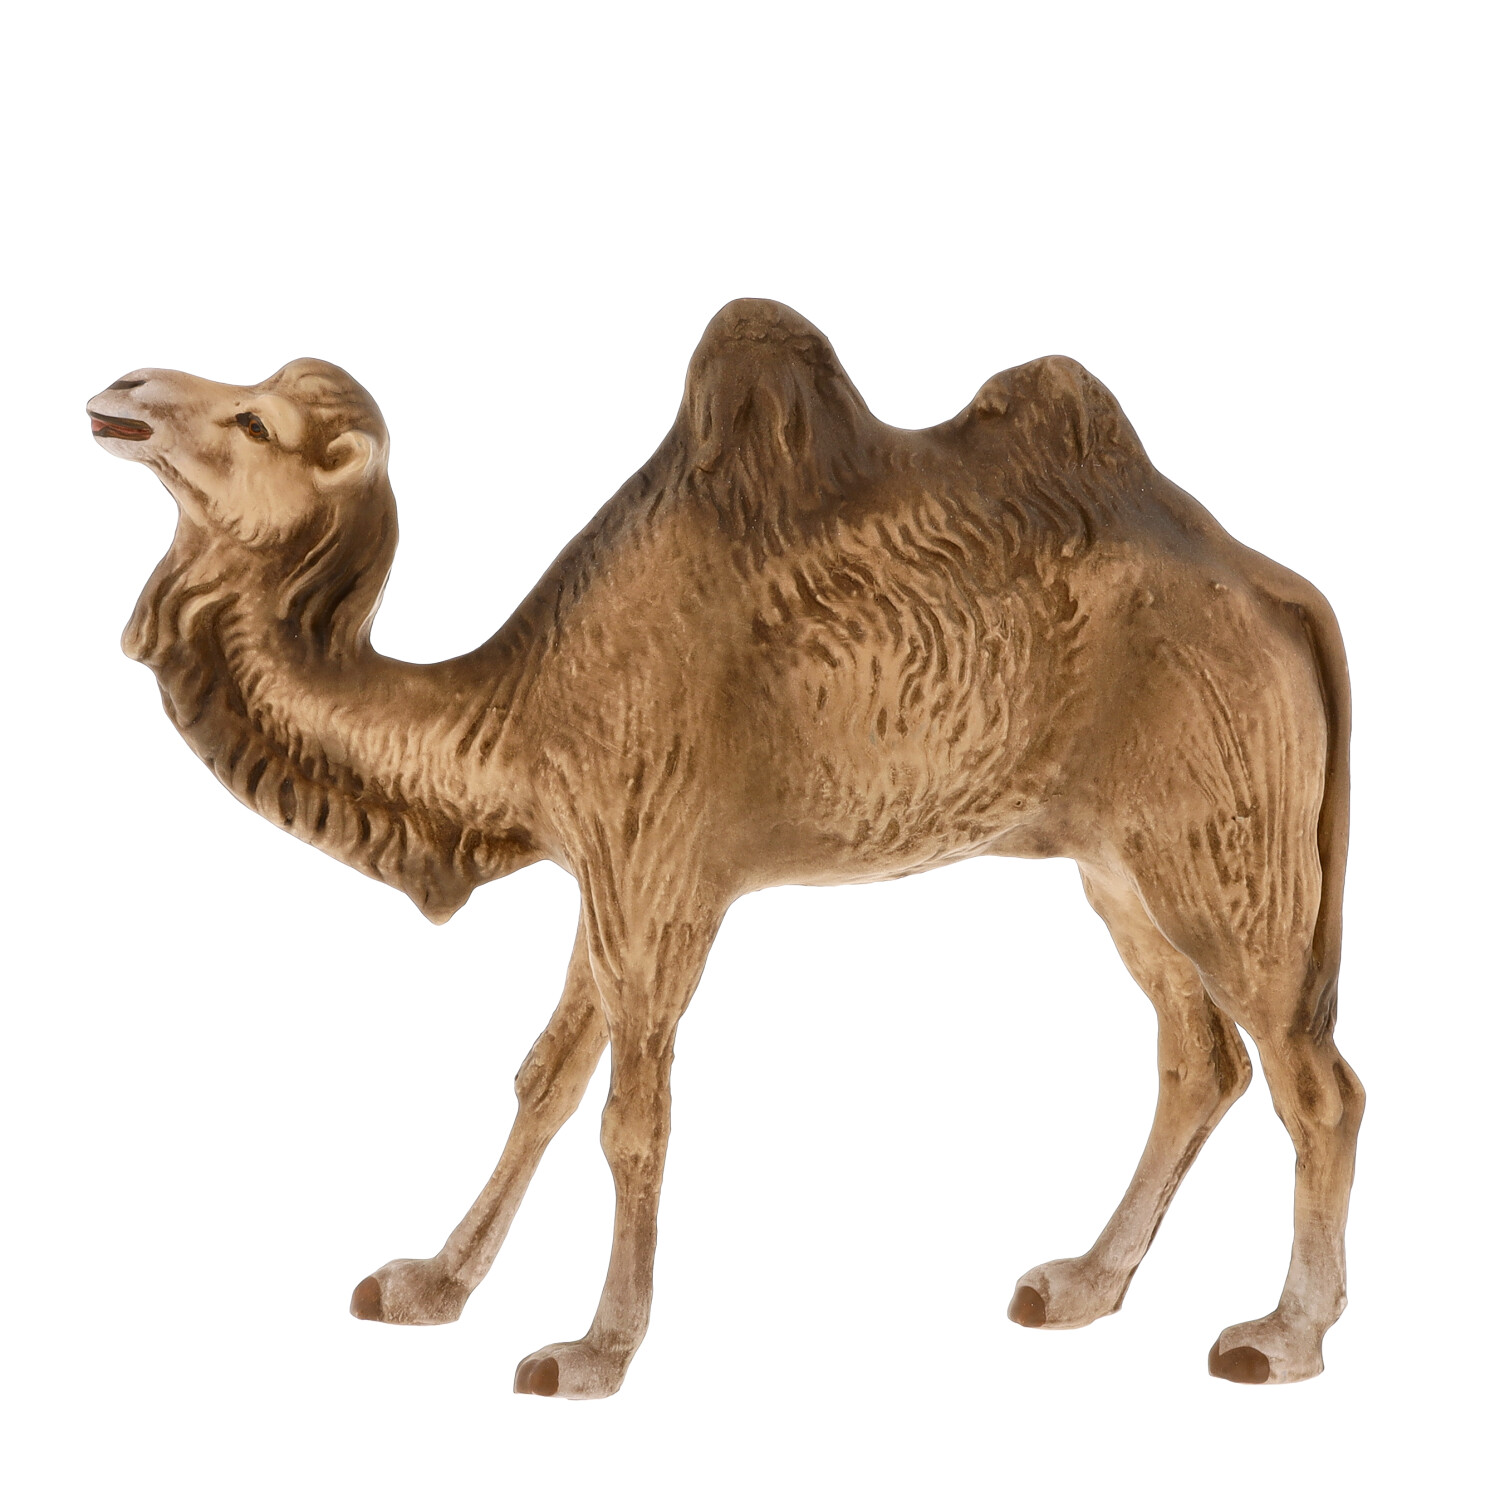 Kamel stehend, zu 11 - 12cm Marolin Krippenfiguren - made in Germany